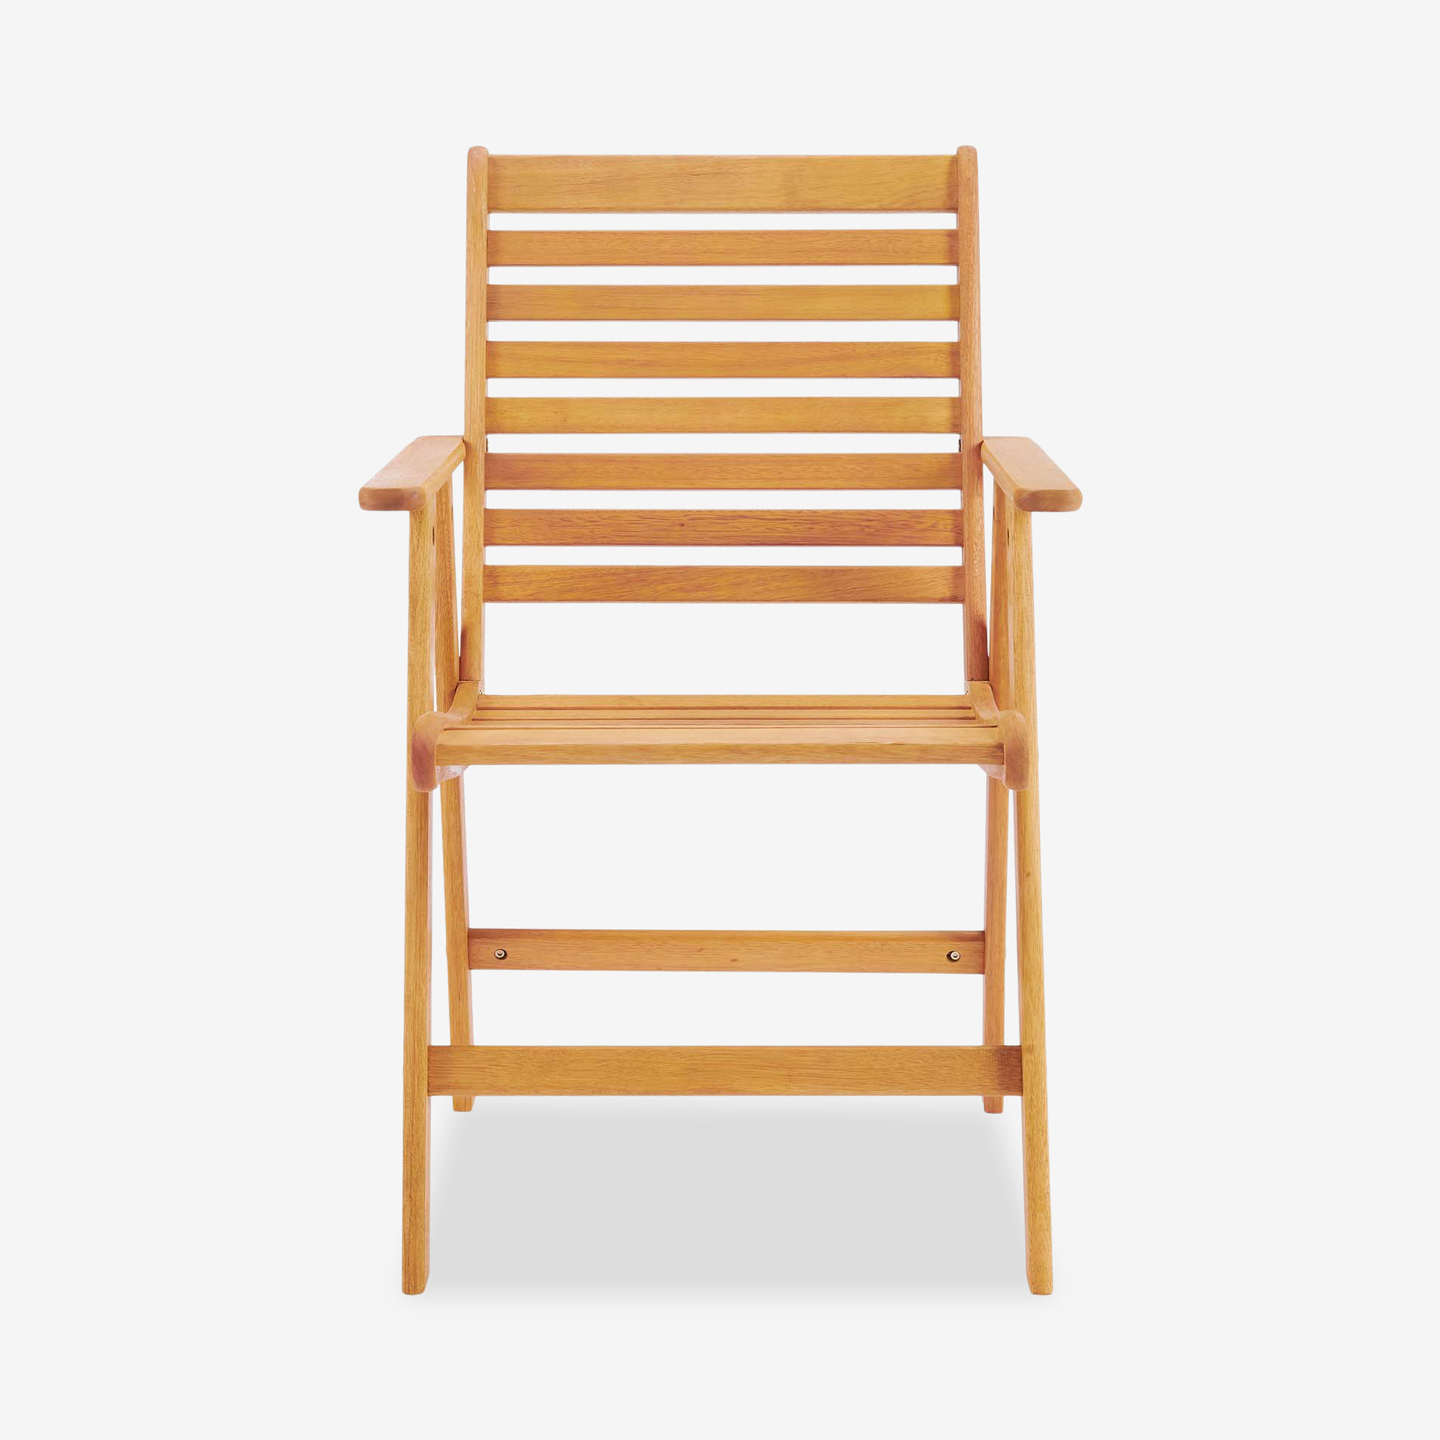 1826_Burnett-Outdoor-Chair_front